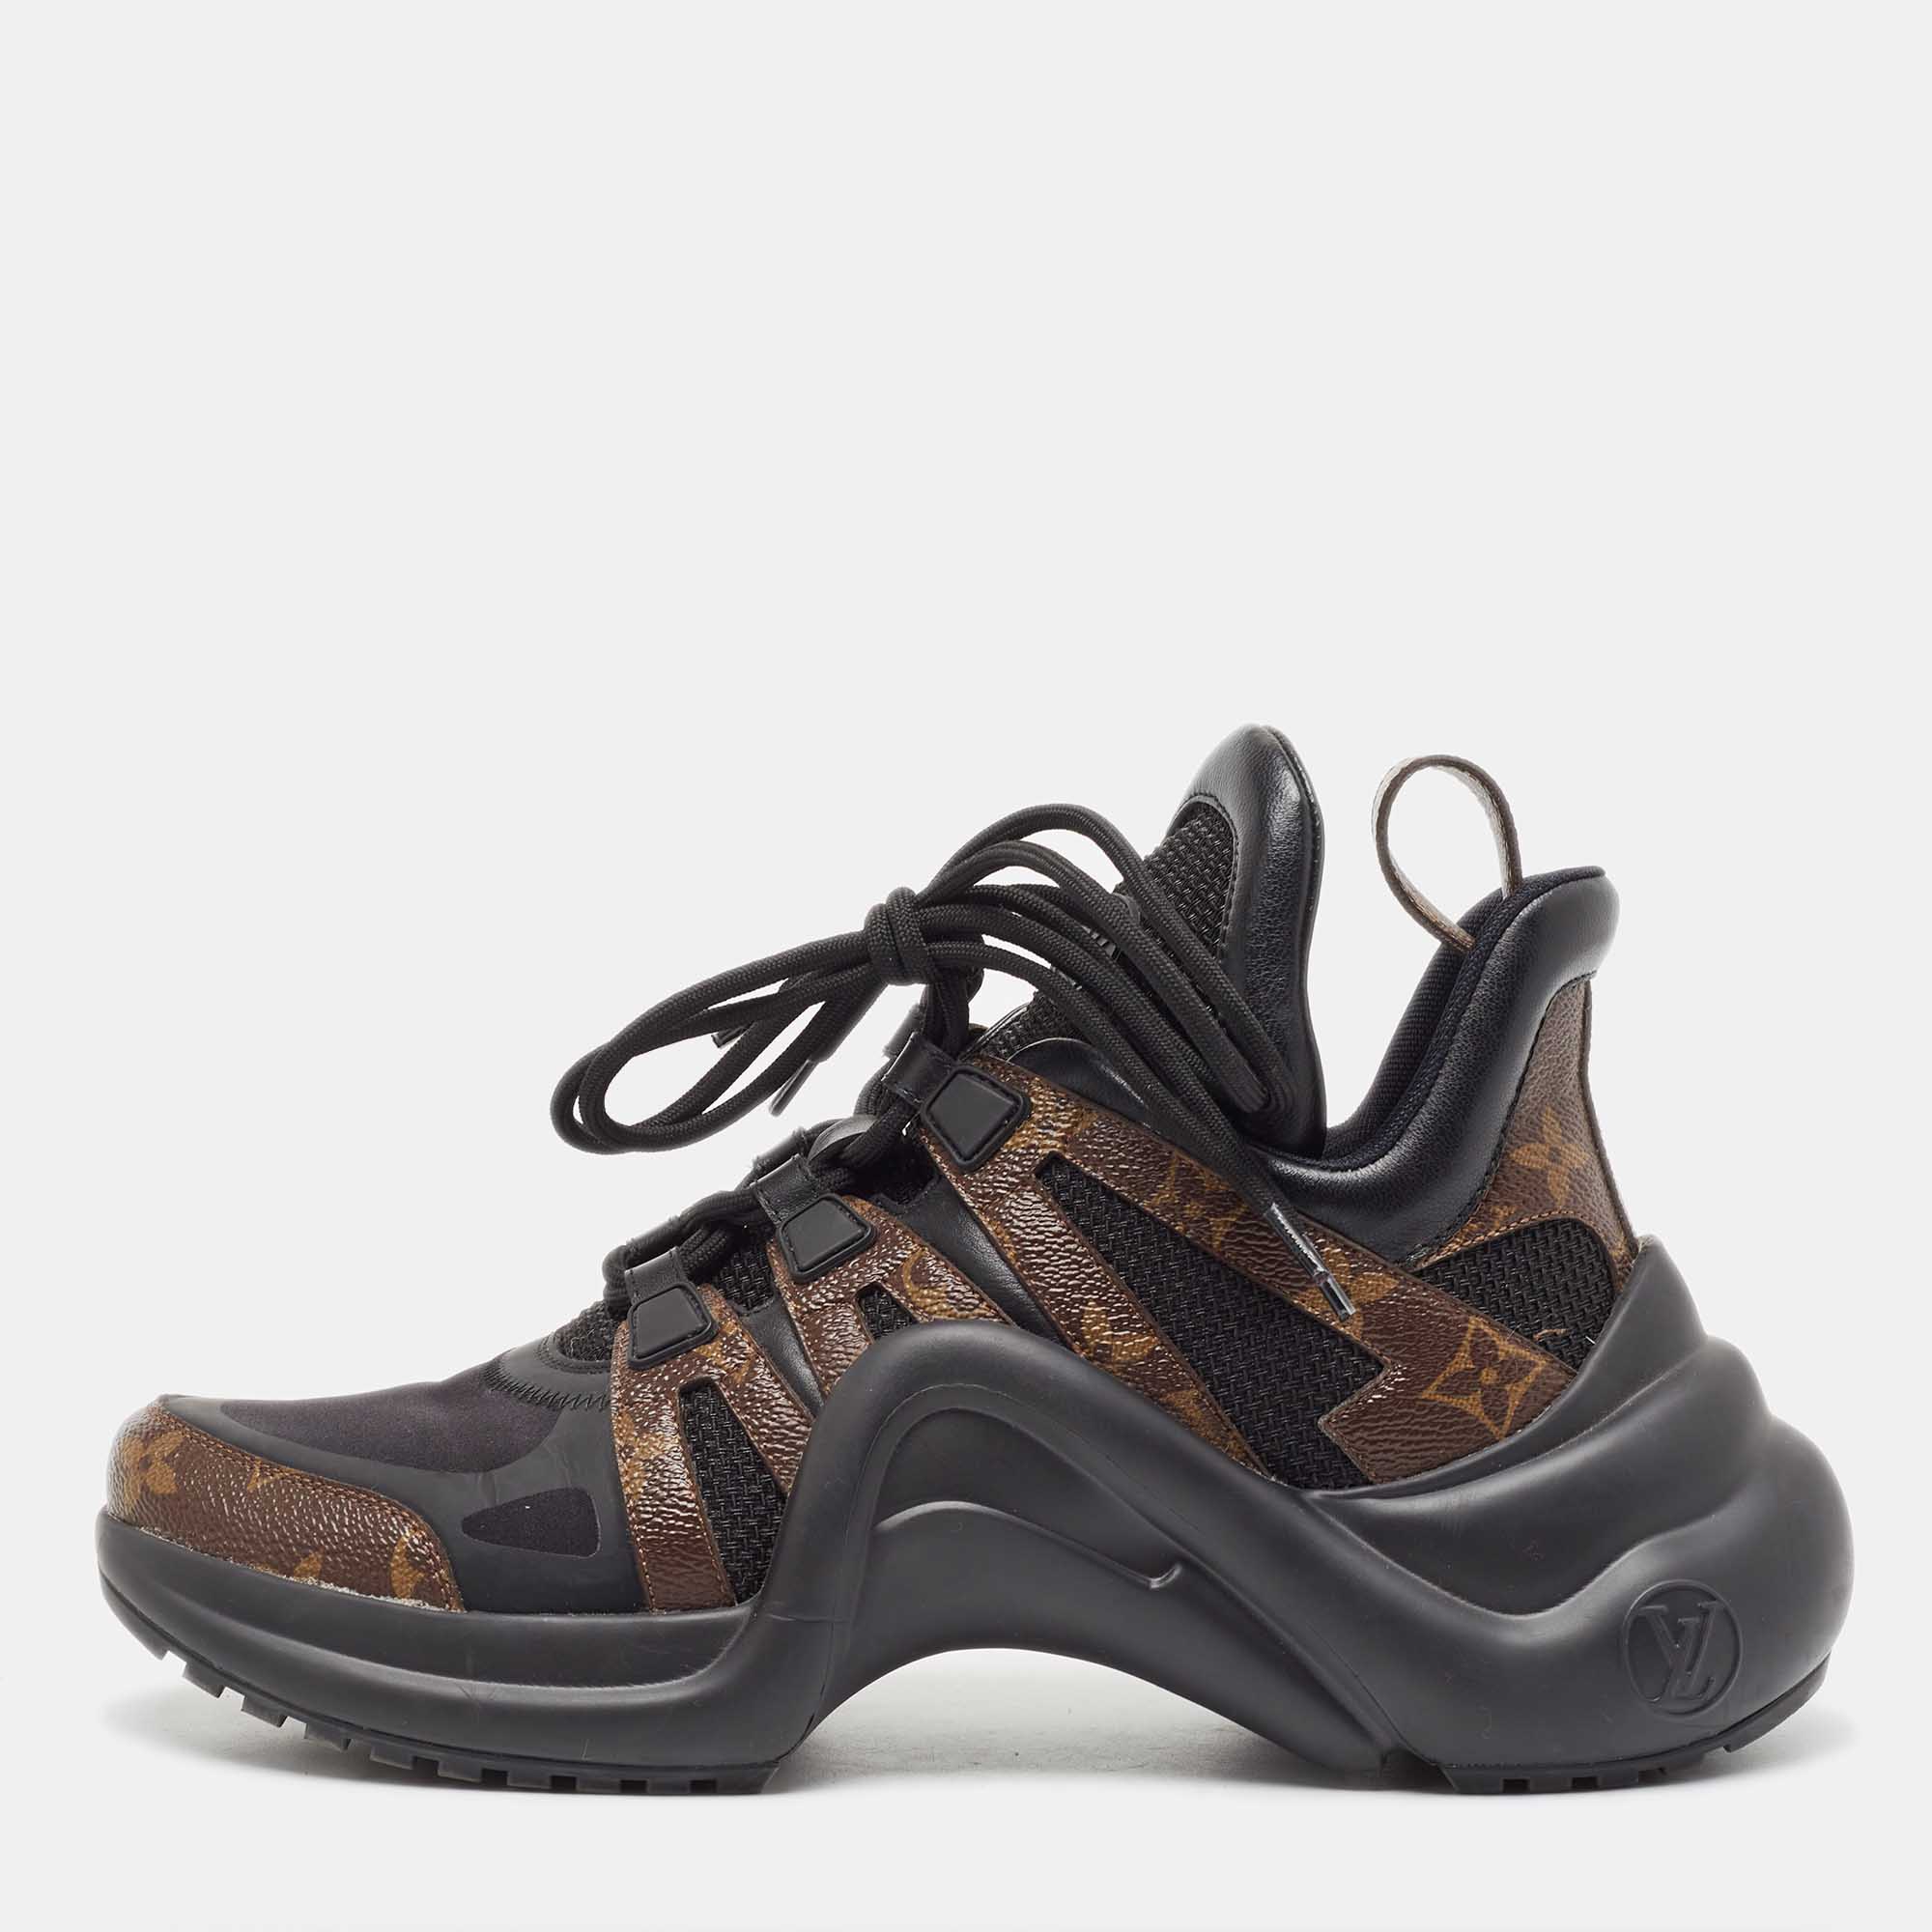 Louis vuitton black/brown nylon, leather archlight sneakers size 40